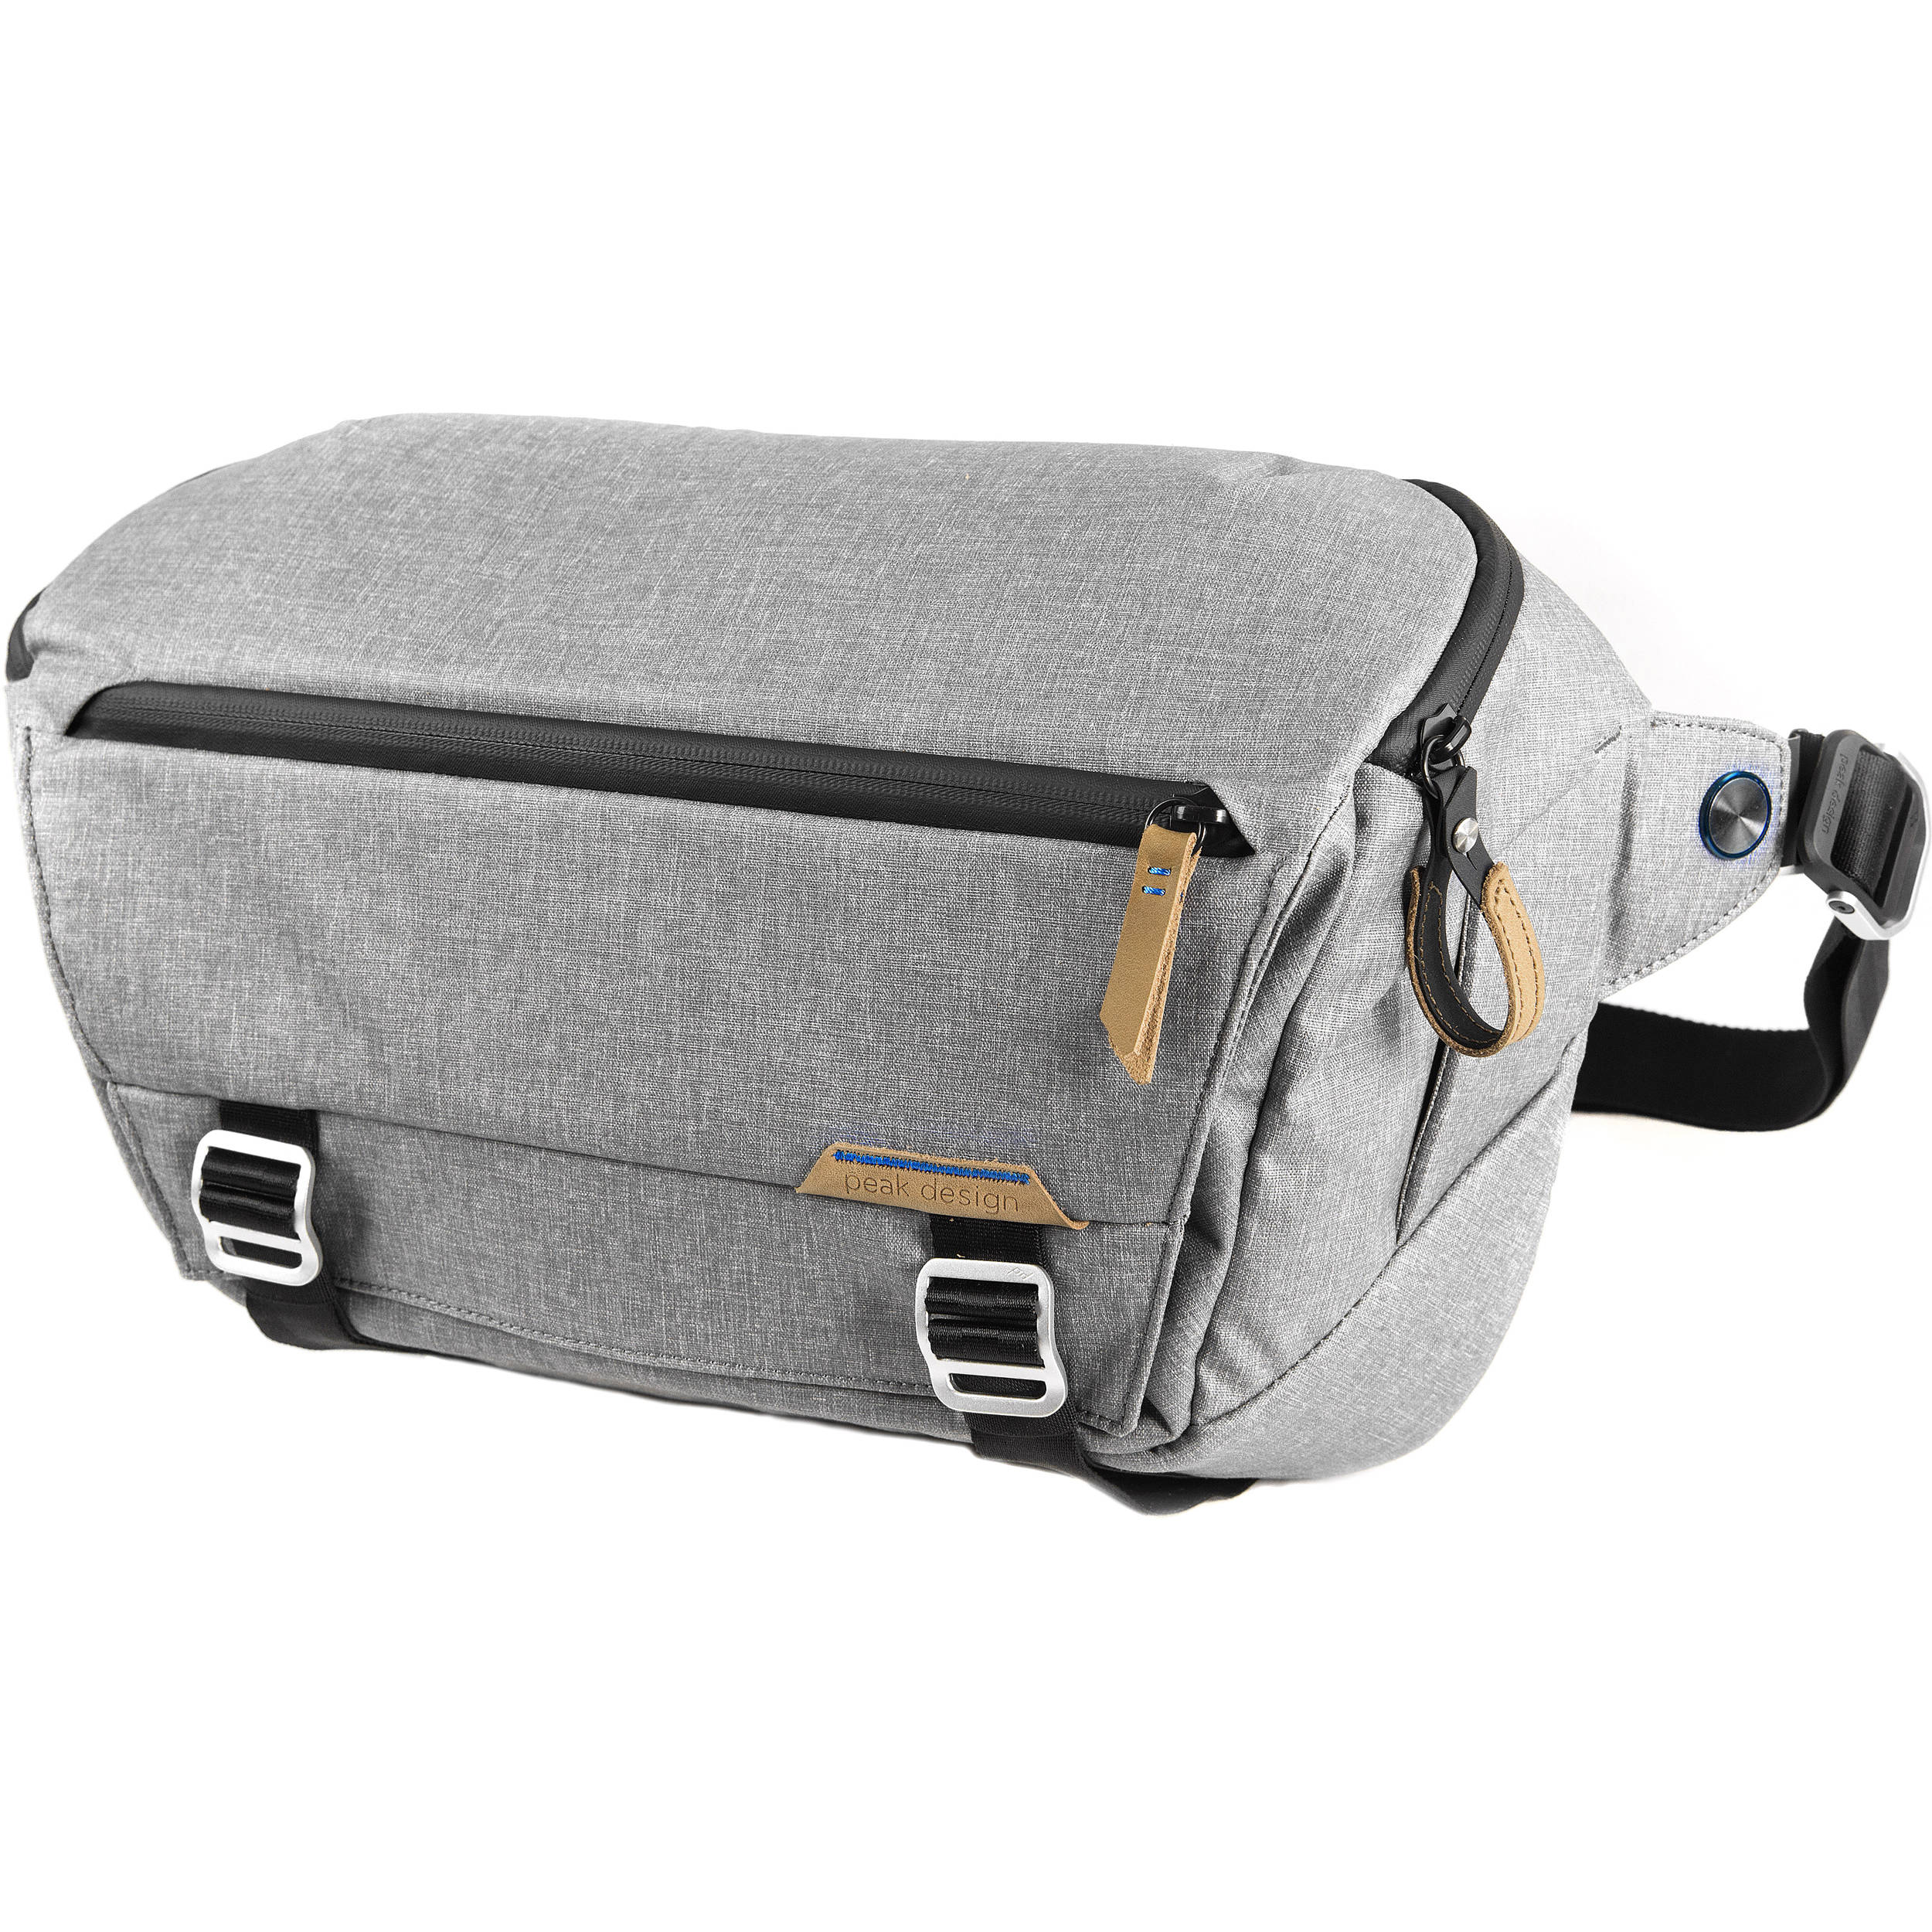 peak design sling bag